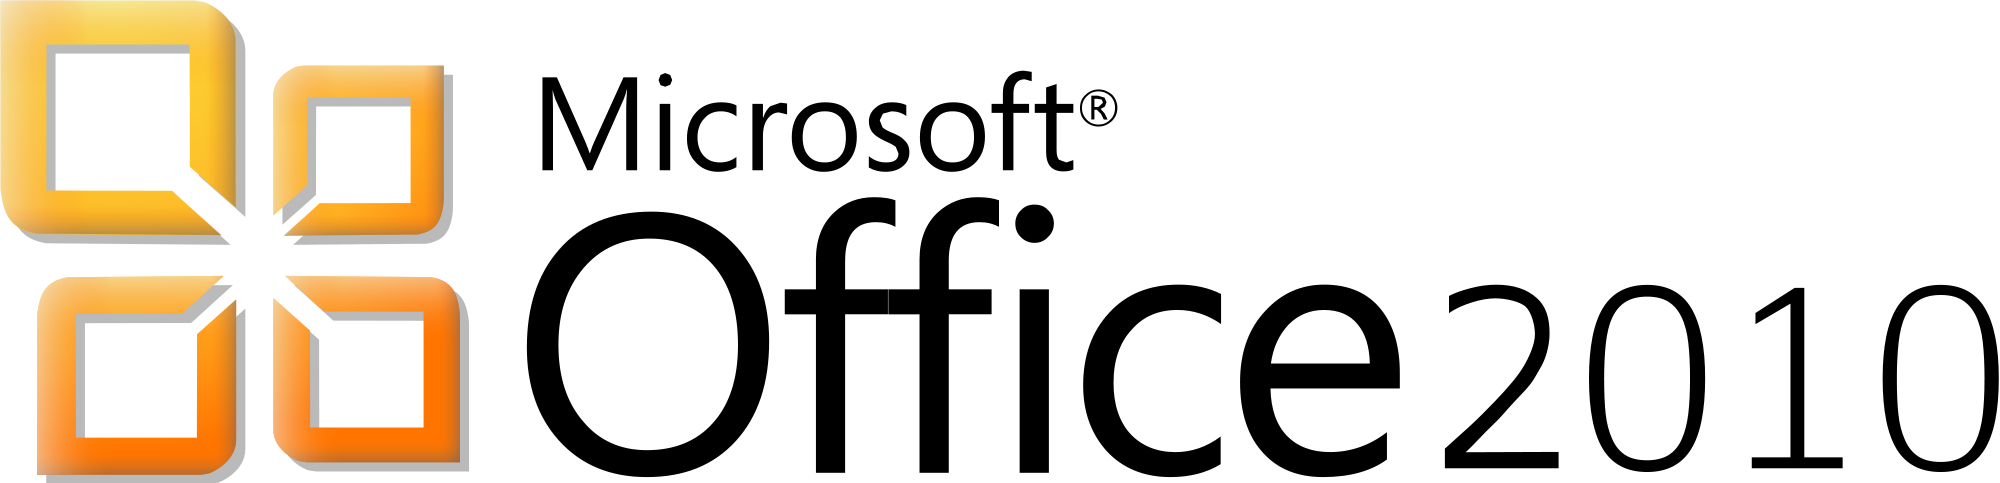 Contact - Microsoft Office 2010 Logo (2000x483)